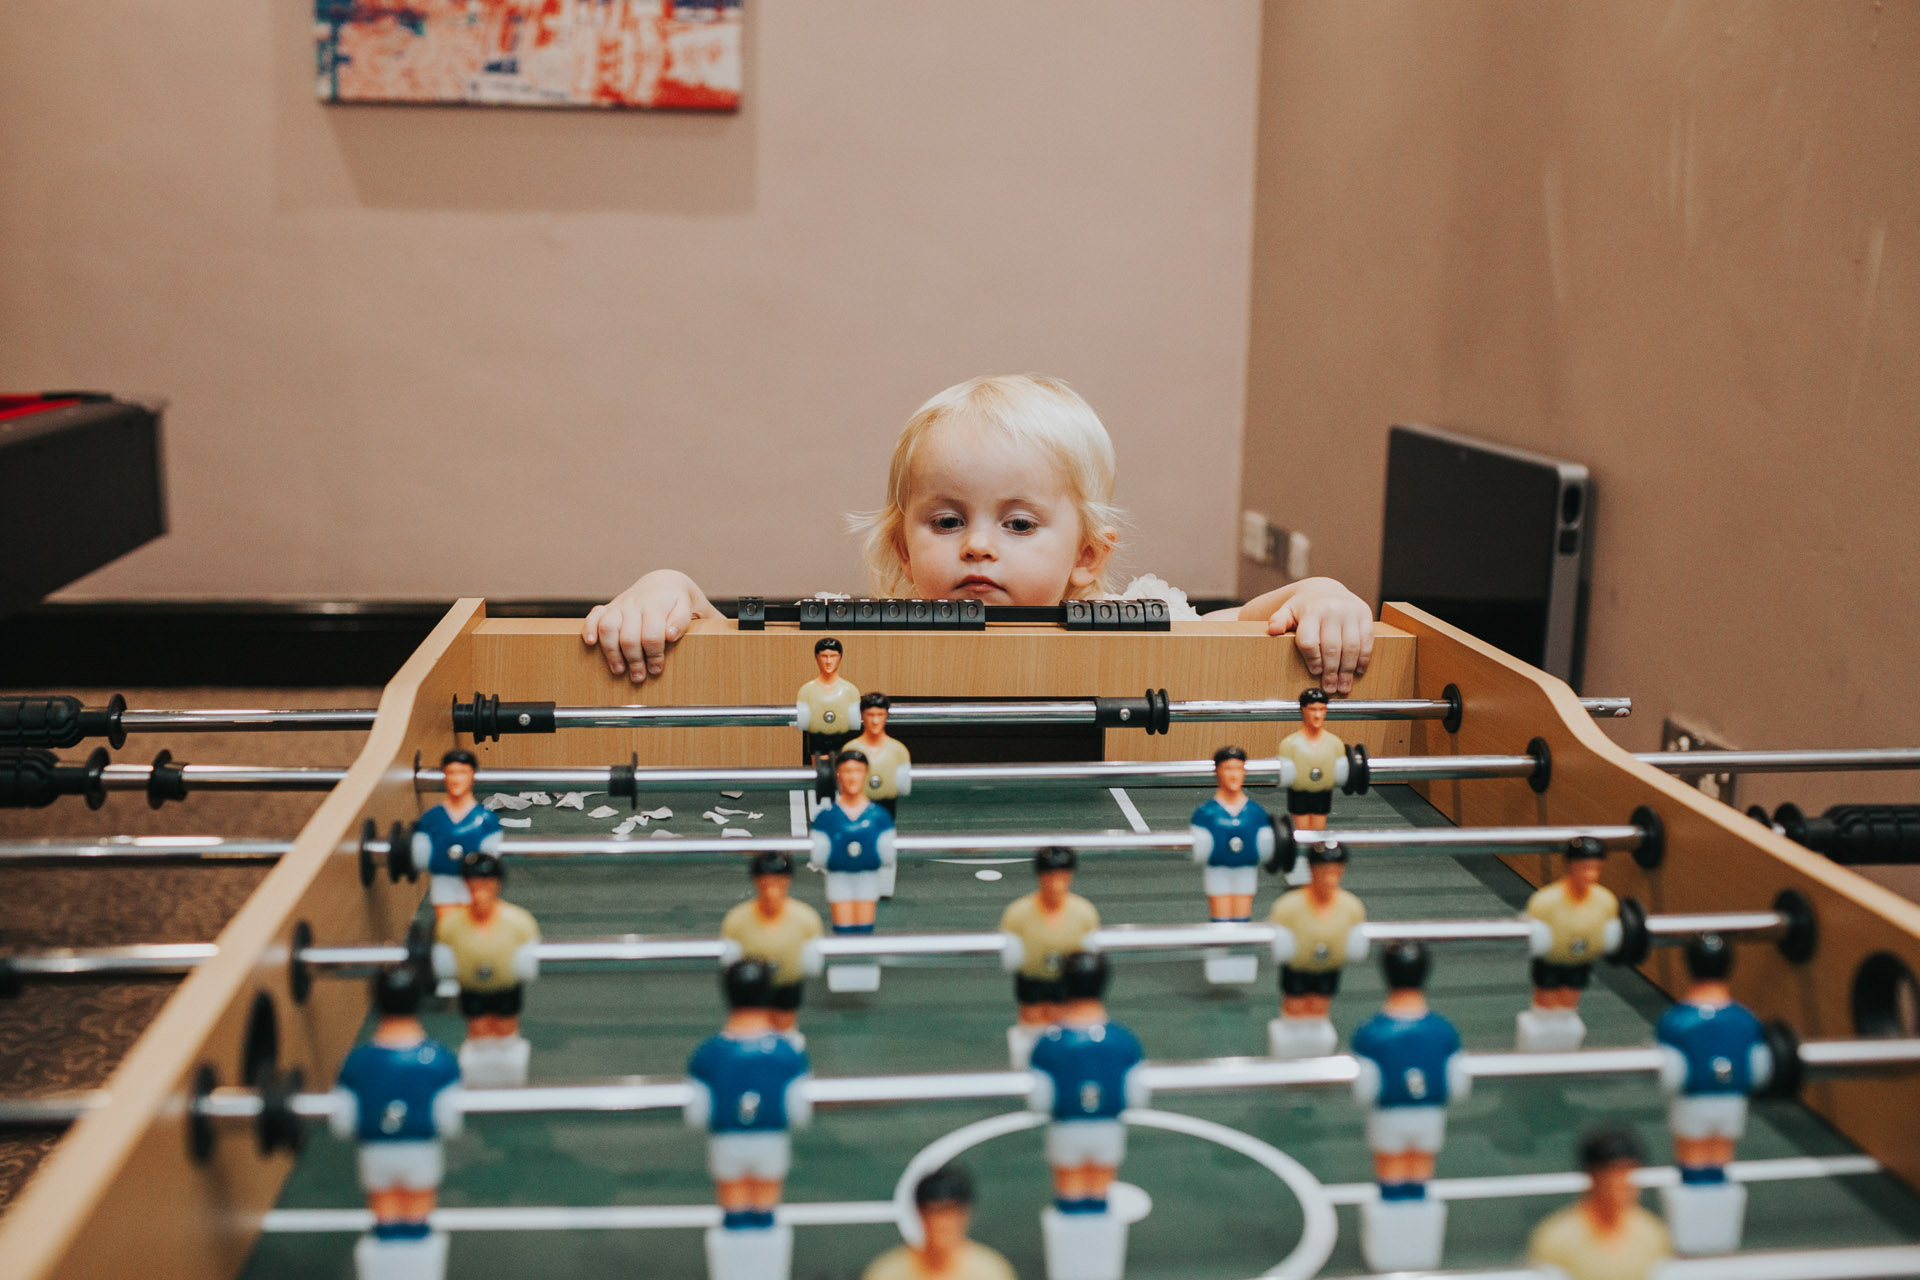 Toddler looking at table football.  